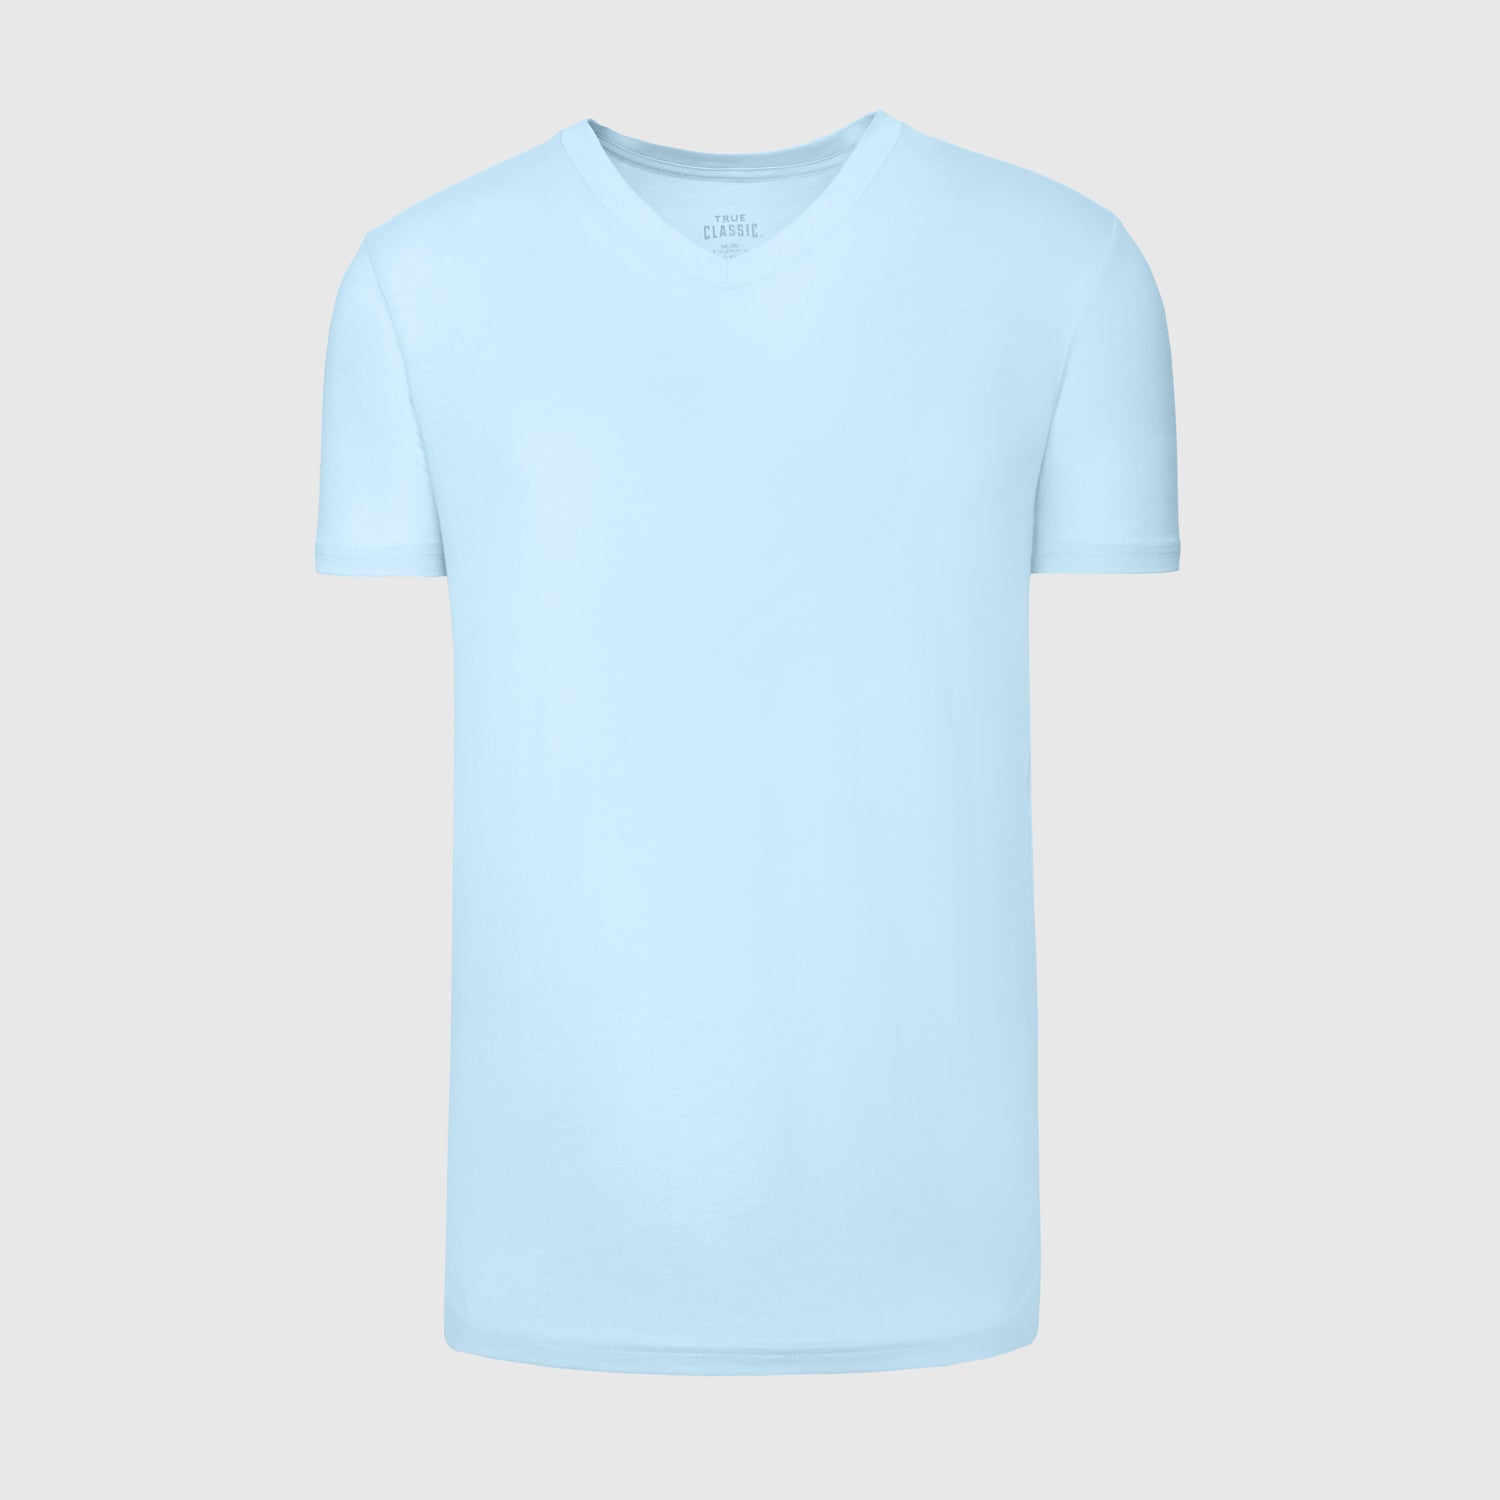 Oxford Blue V-Neck T-Shirt